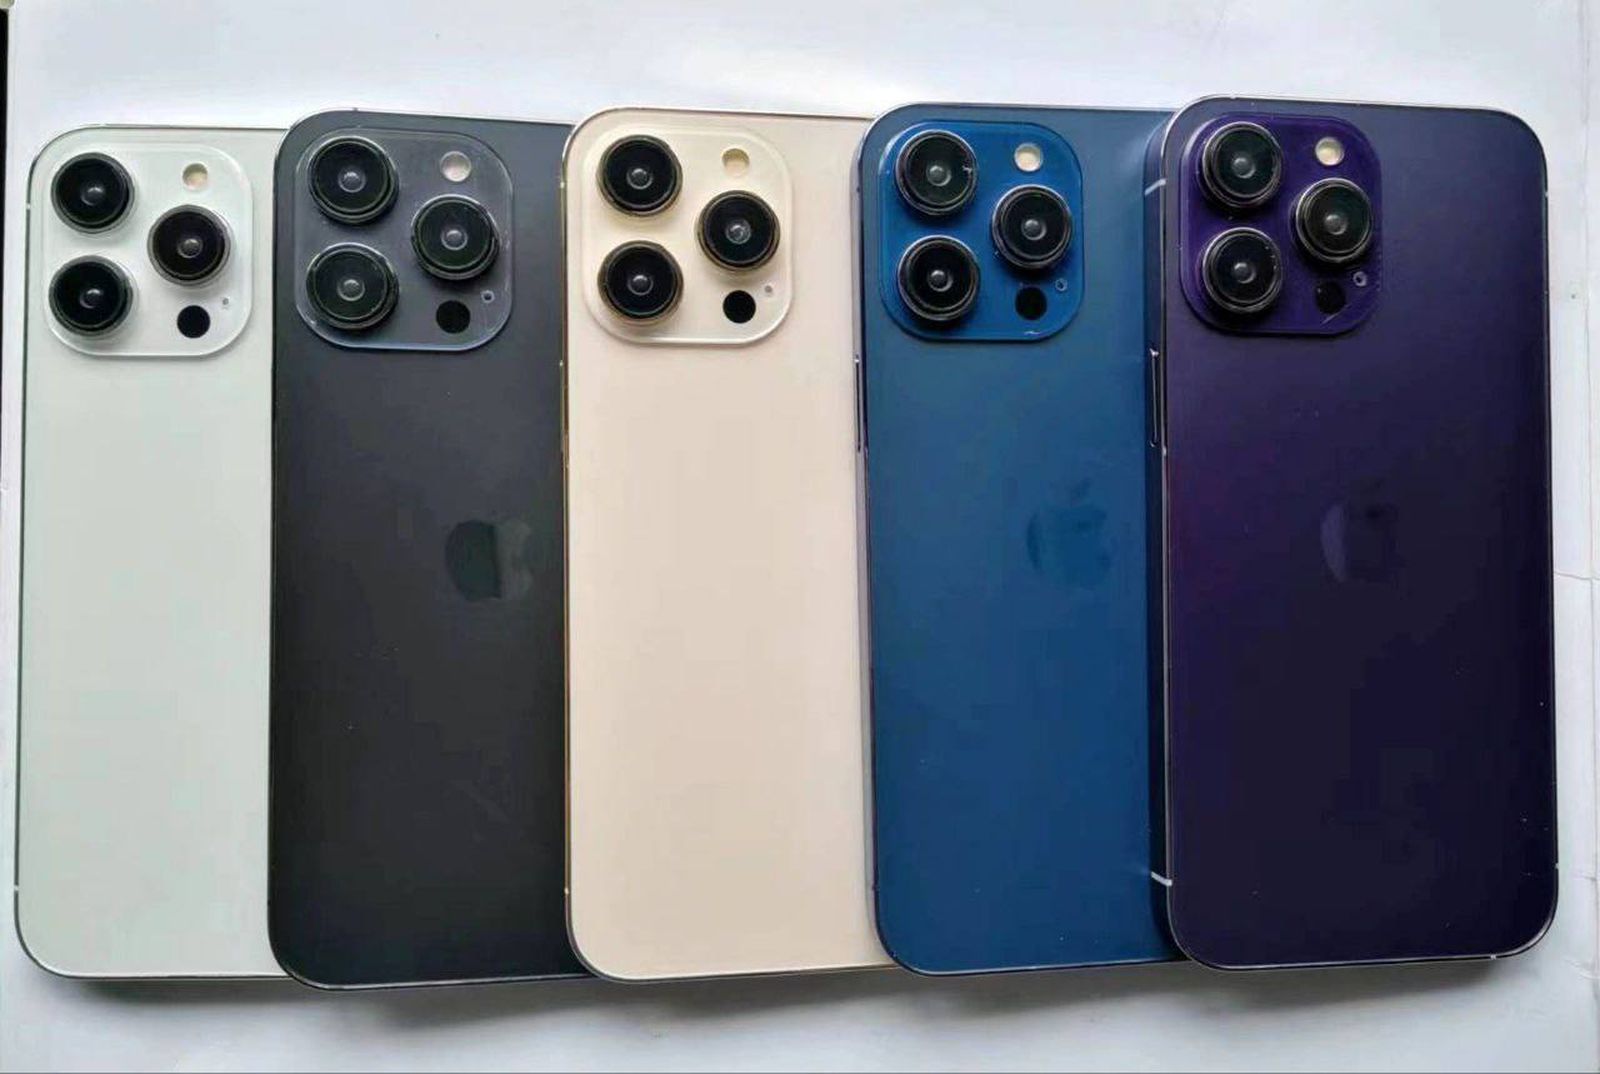 https://www.gizmochina.com/wp-content/uploads/2022/08/Apple-iPhone-14-Pro-Colors.jpeg